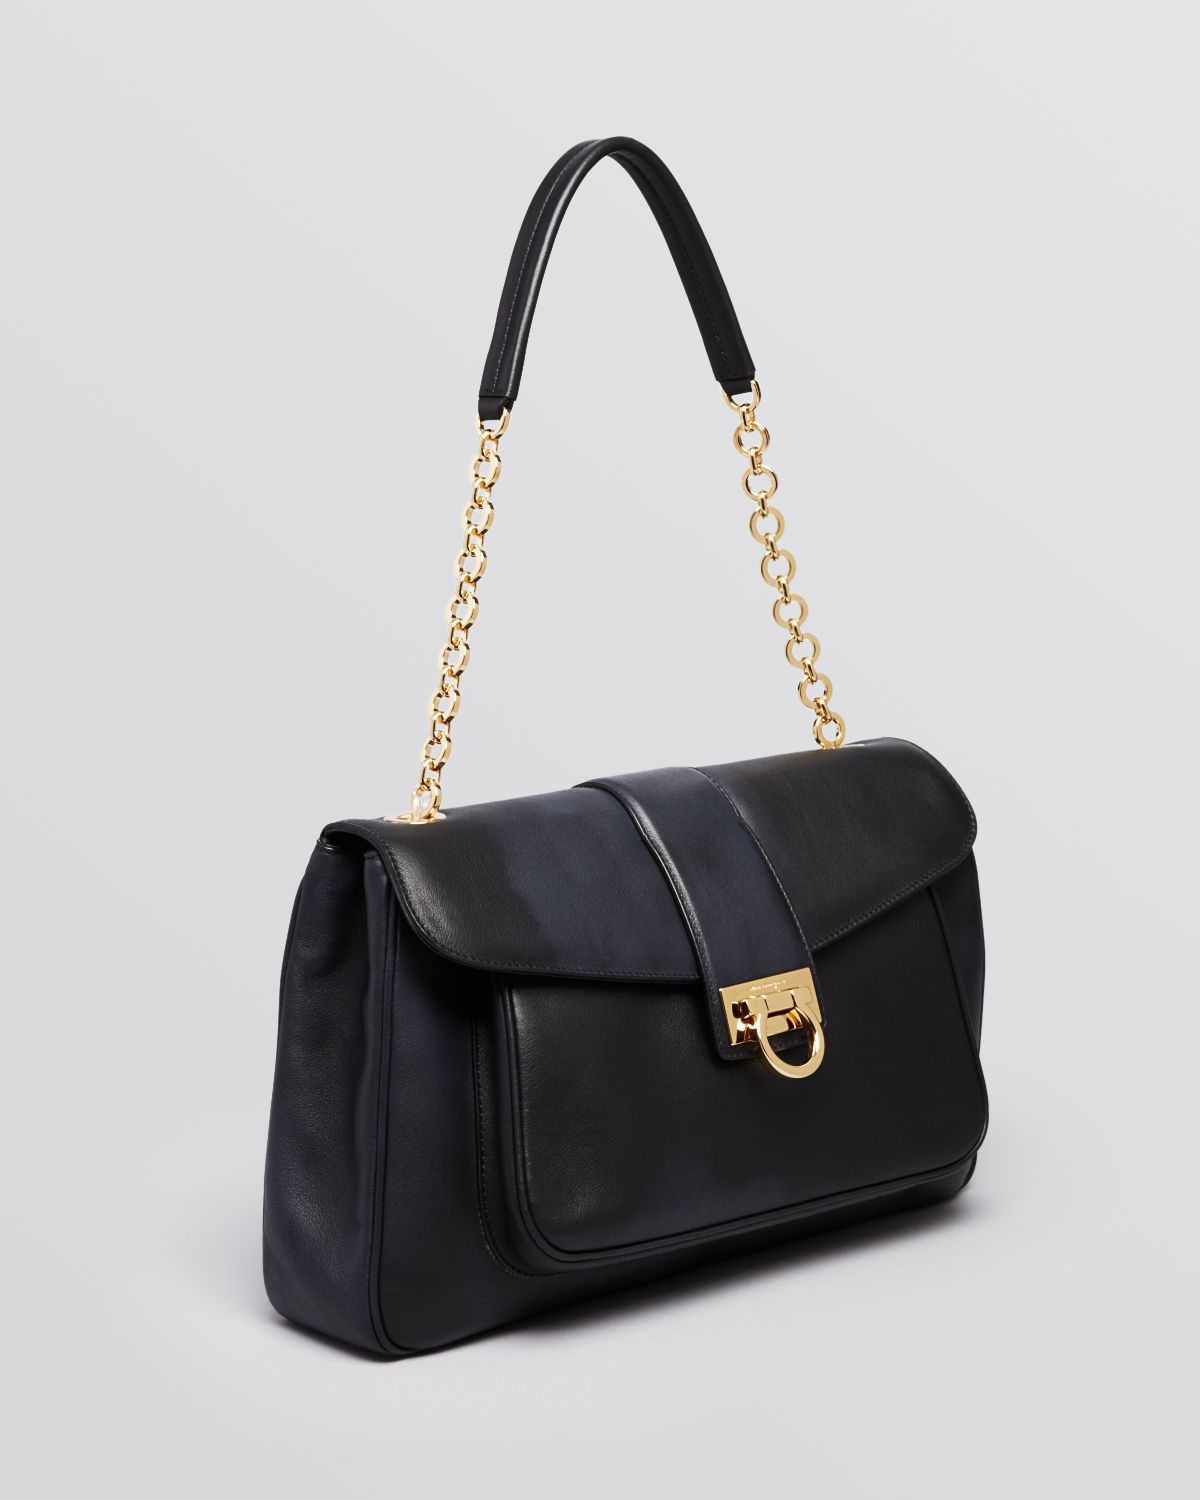 Lyst - Ferragamo Shoulder Bag - Paula Chain in Black